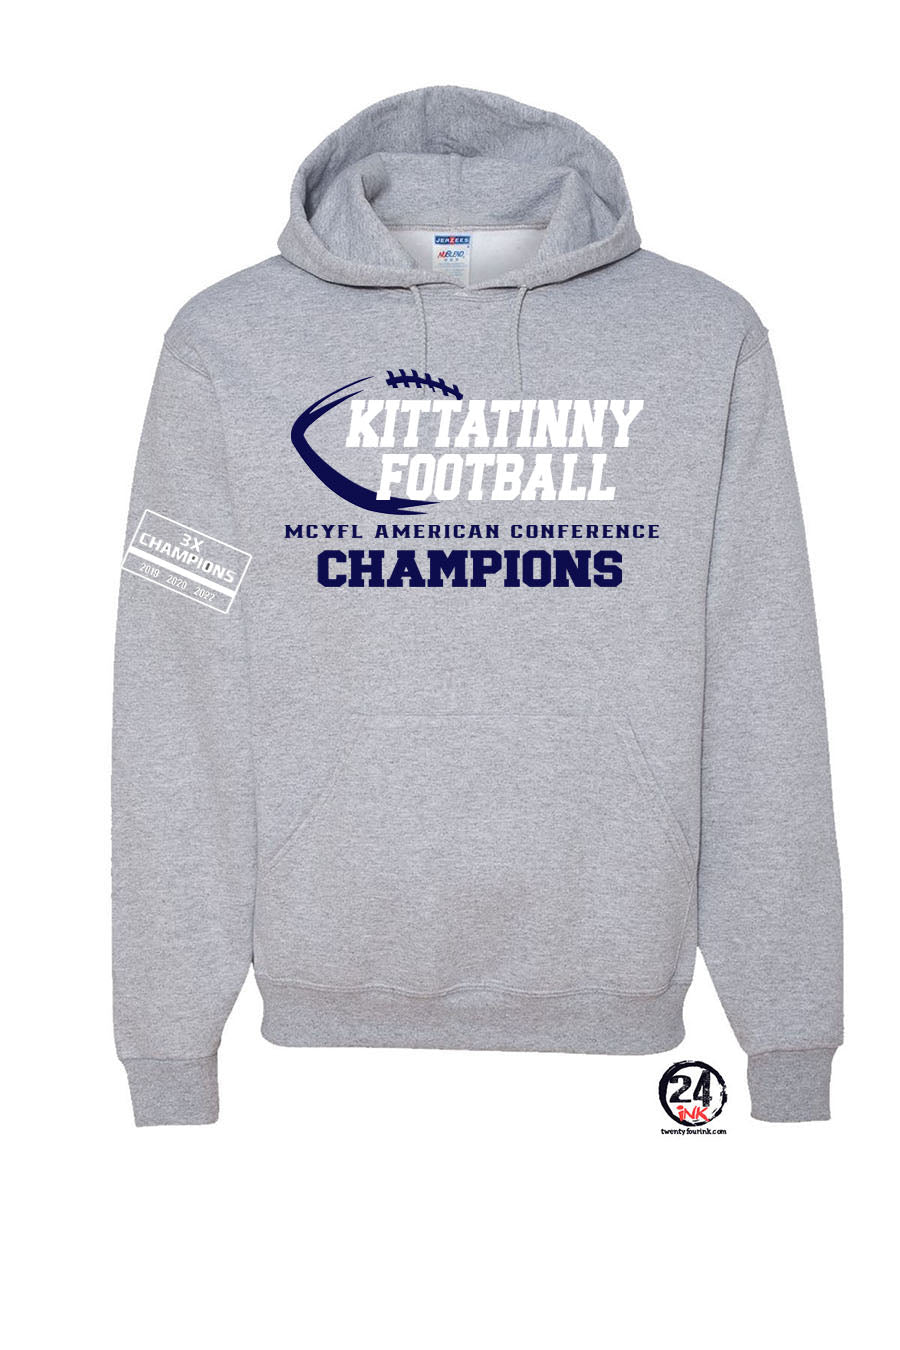 Kittatinny Football Champs Hooded Sweatshirt